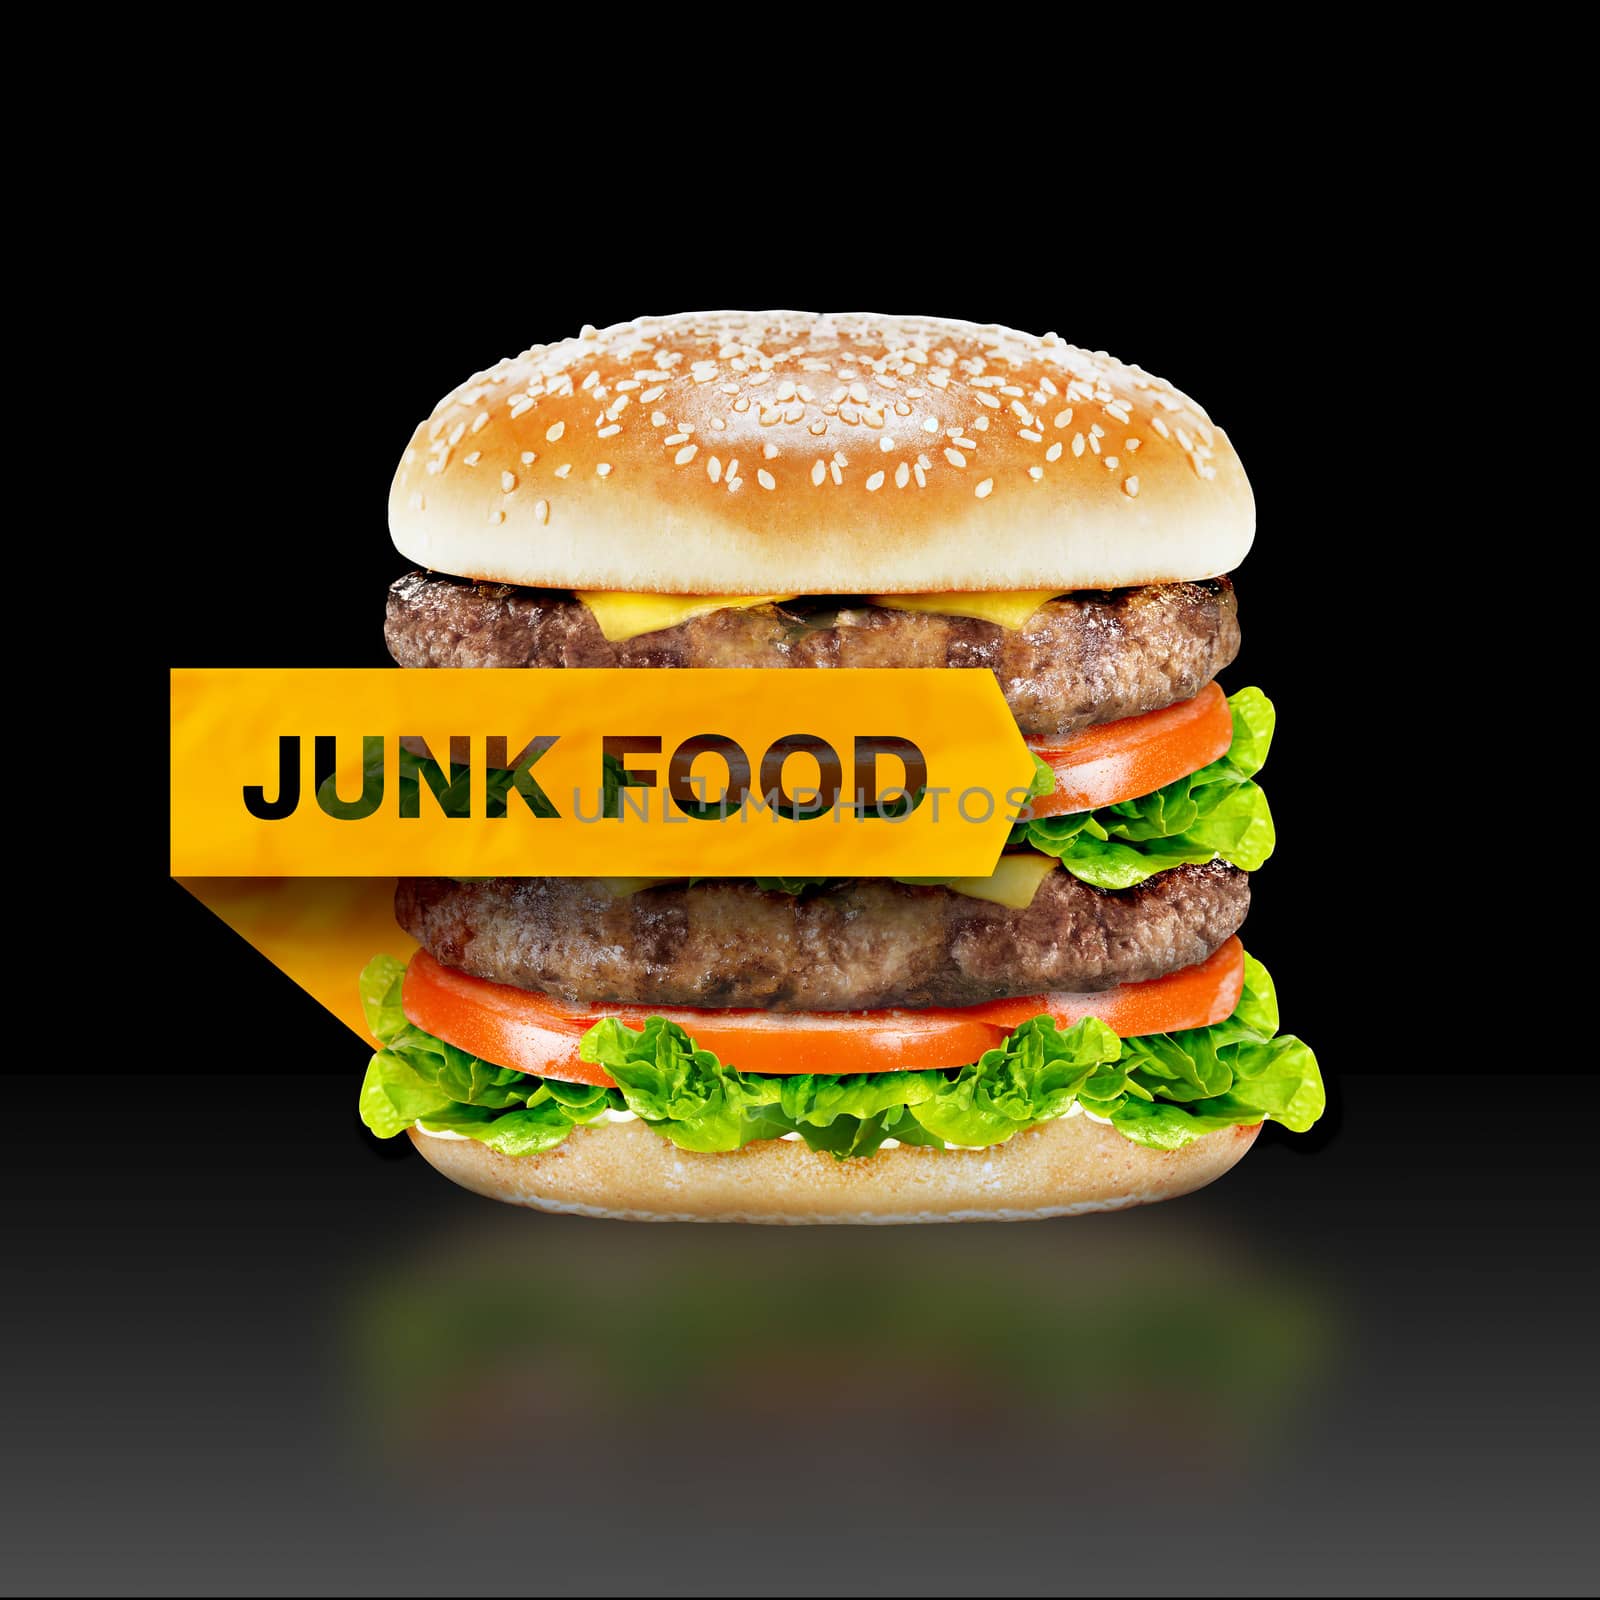 Junk Food by designsstock